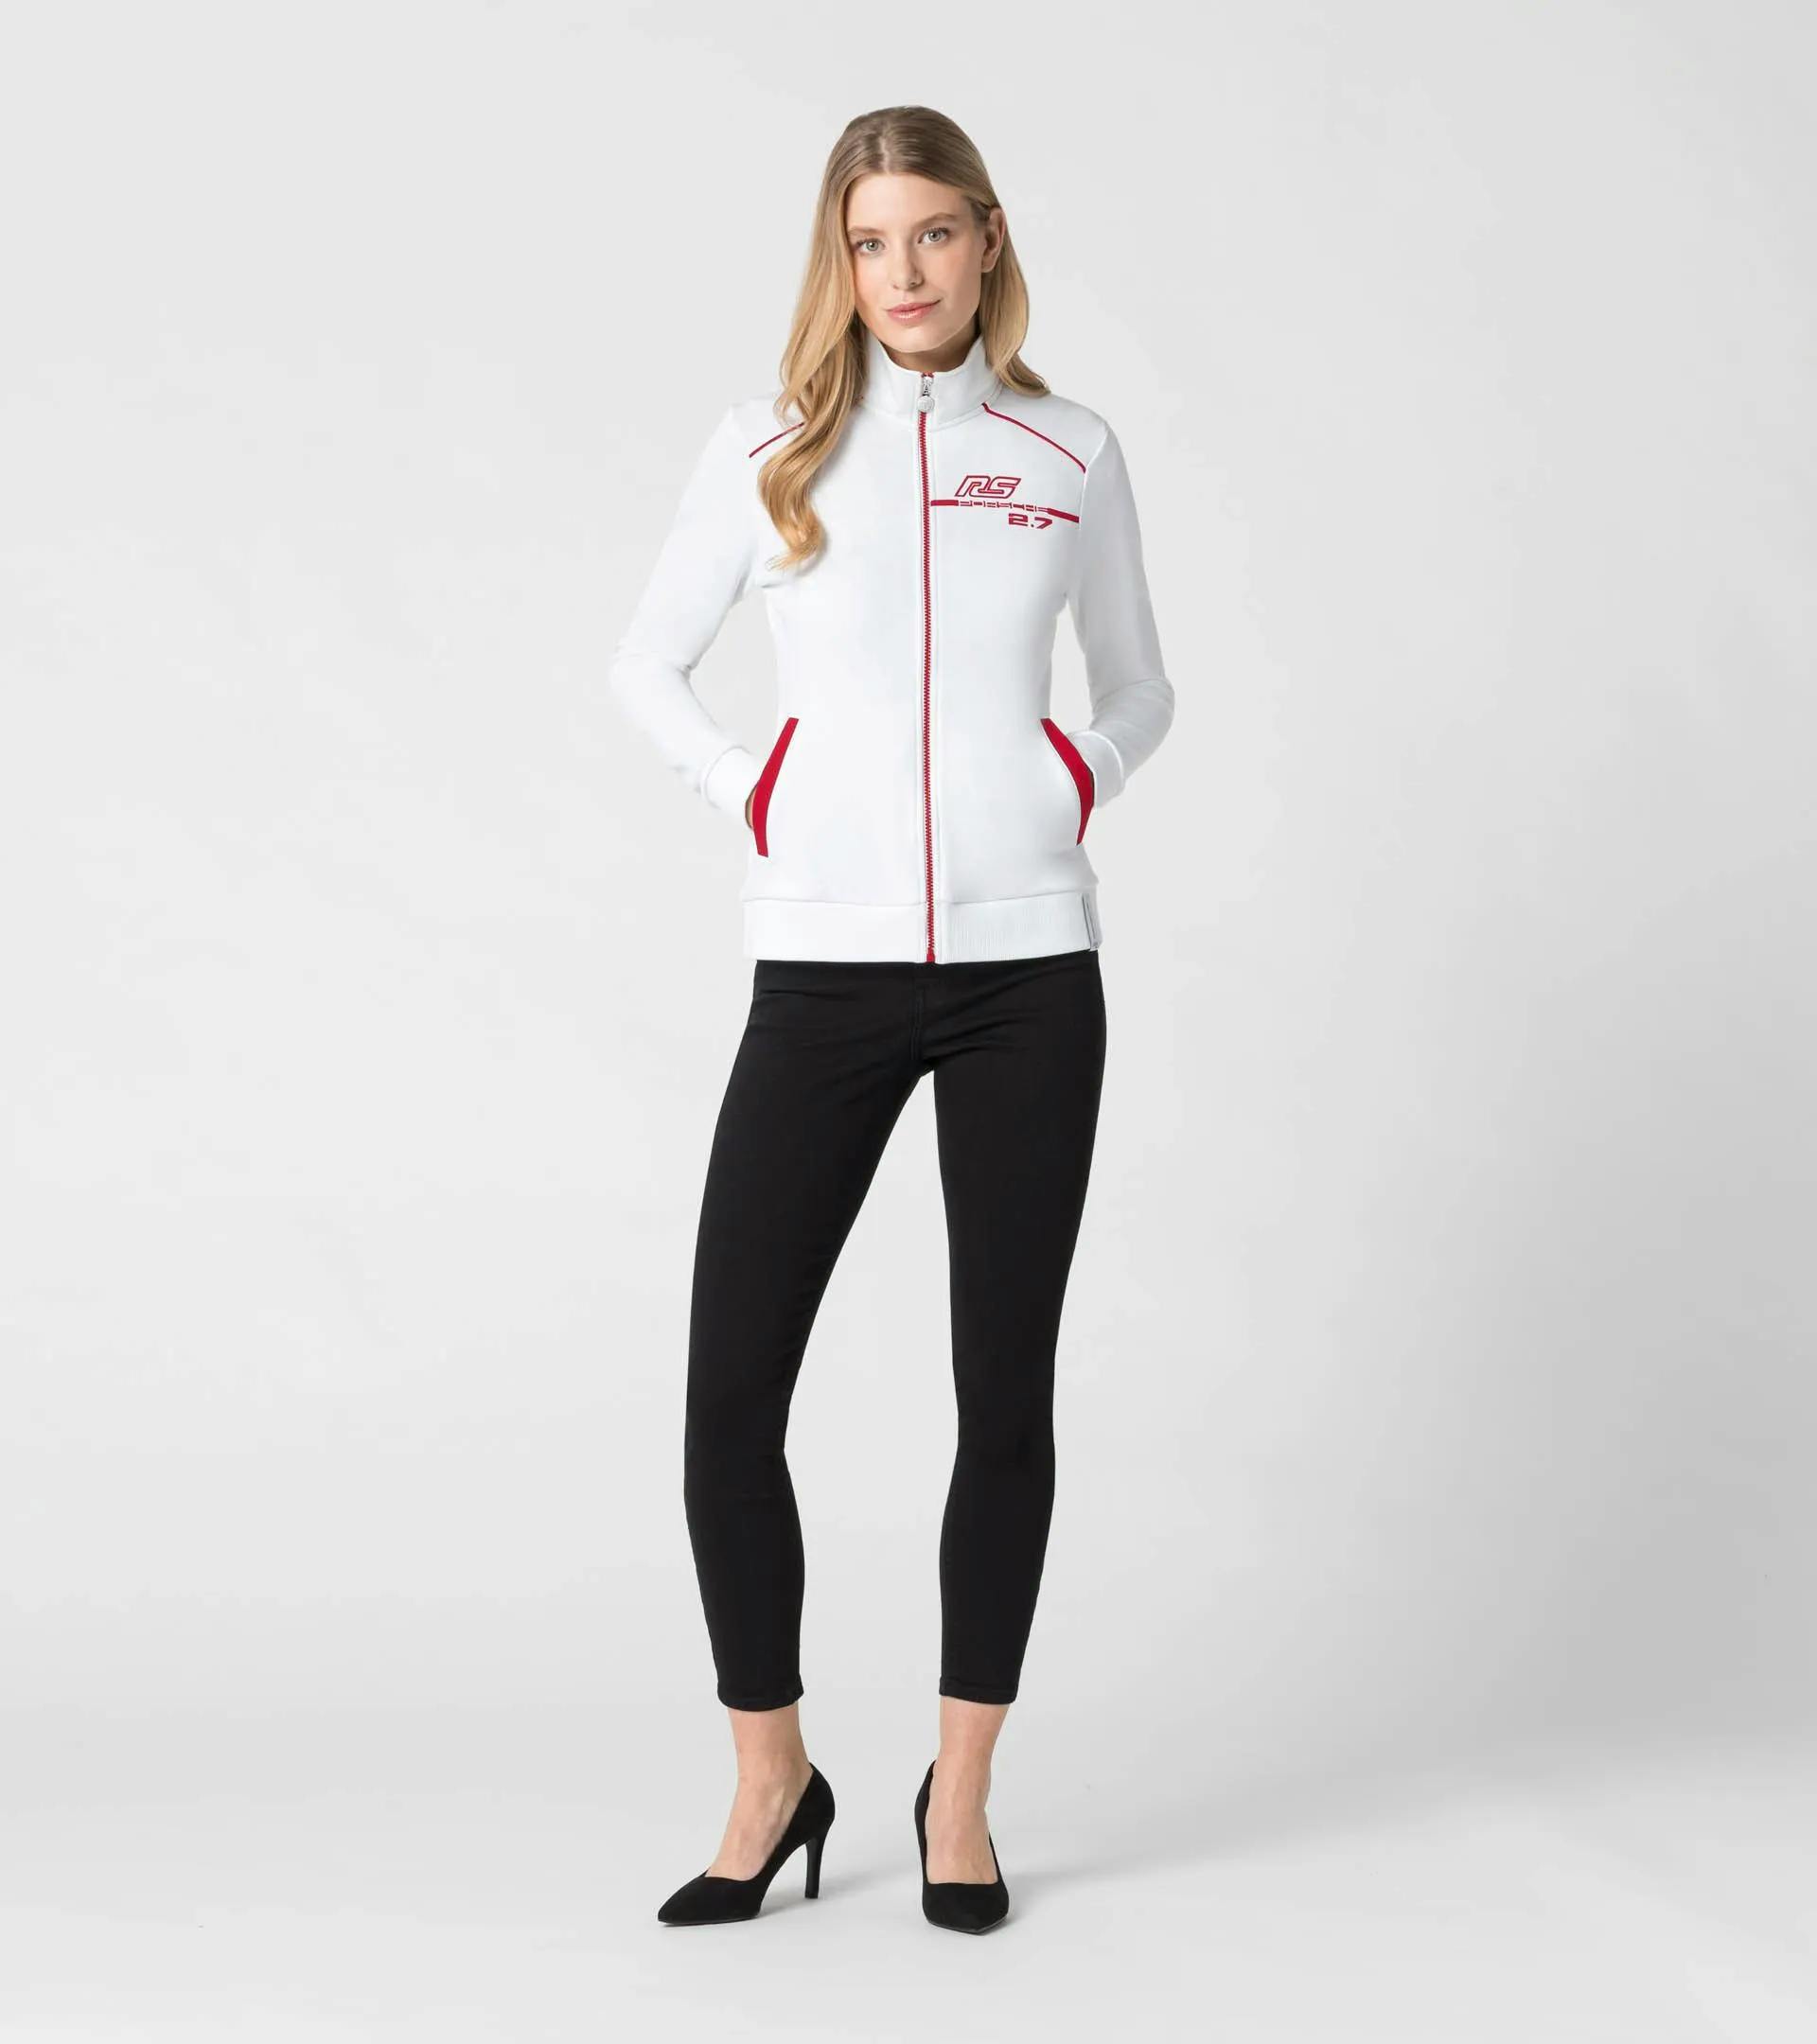 Women's training jacket – RS 2.7 6